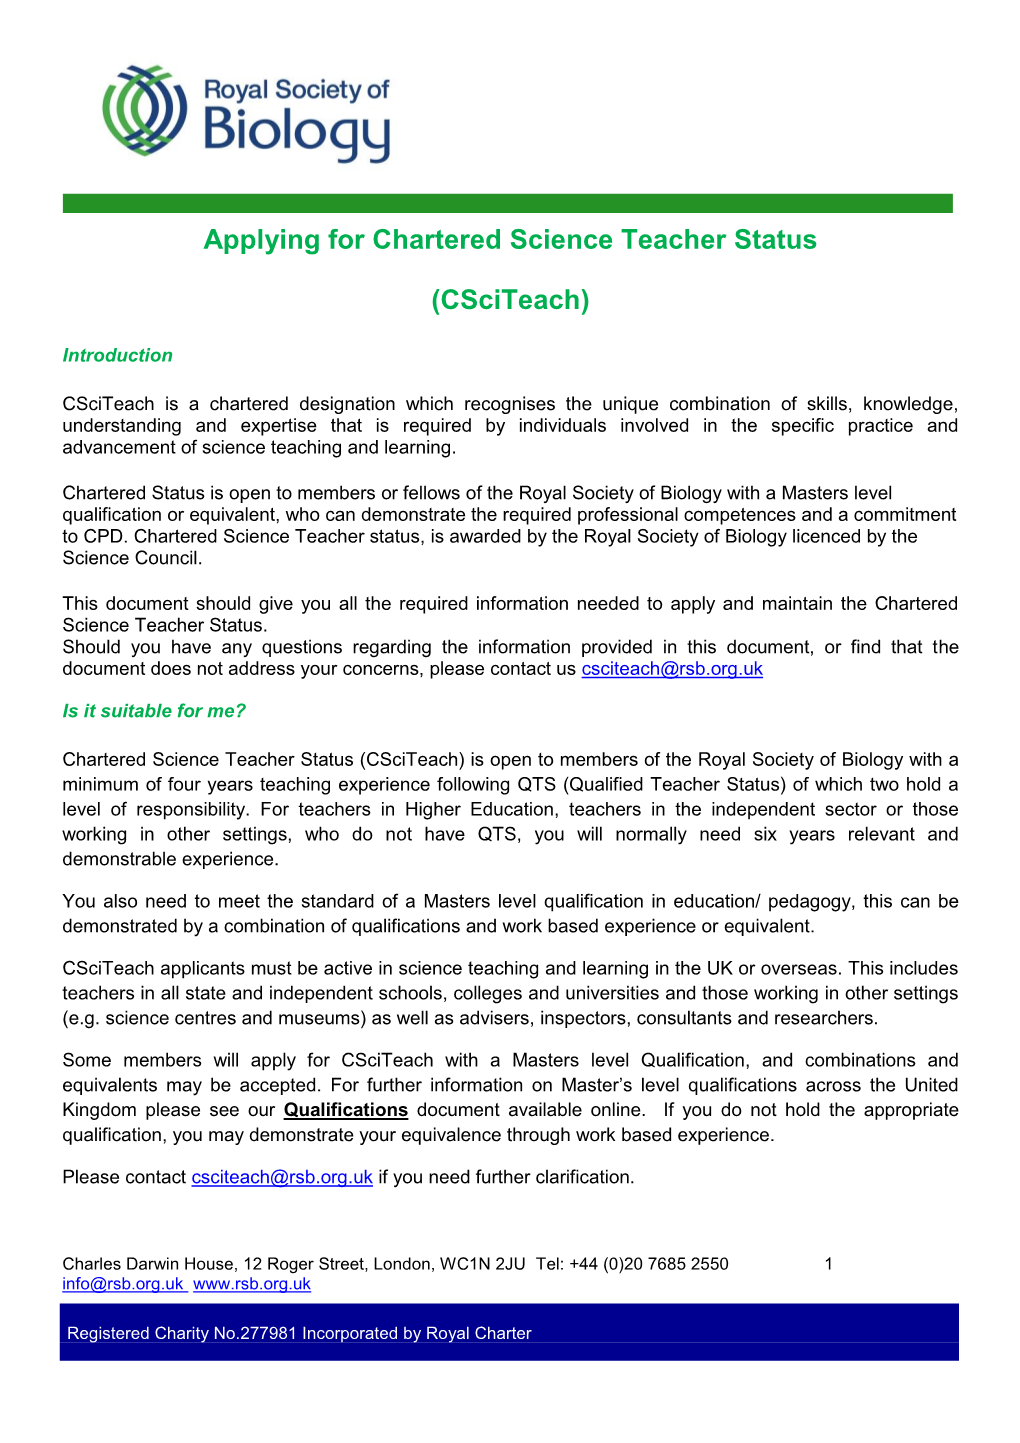 Applying for Chartered Science Teacher Status (Csciteach)